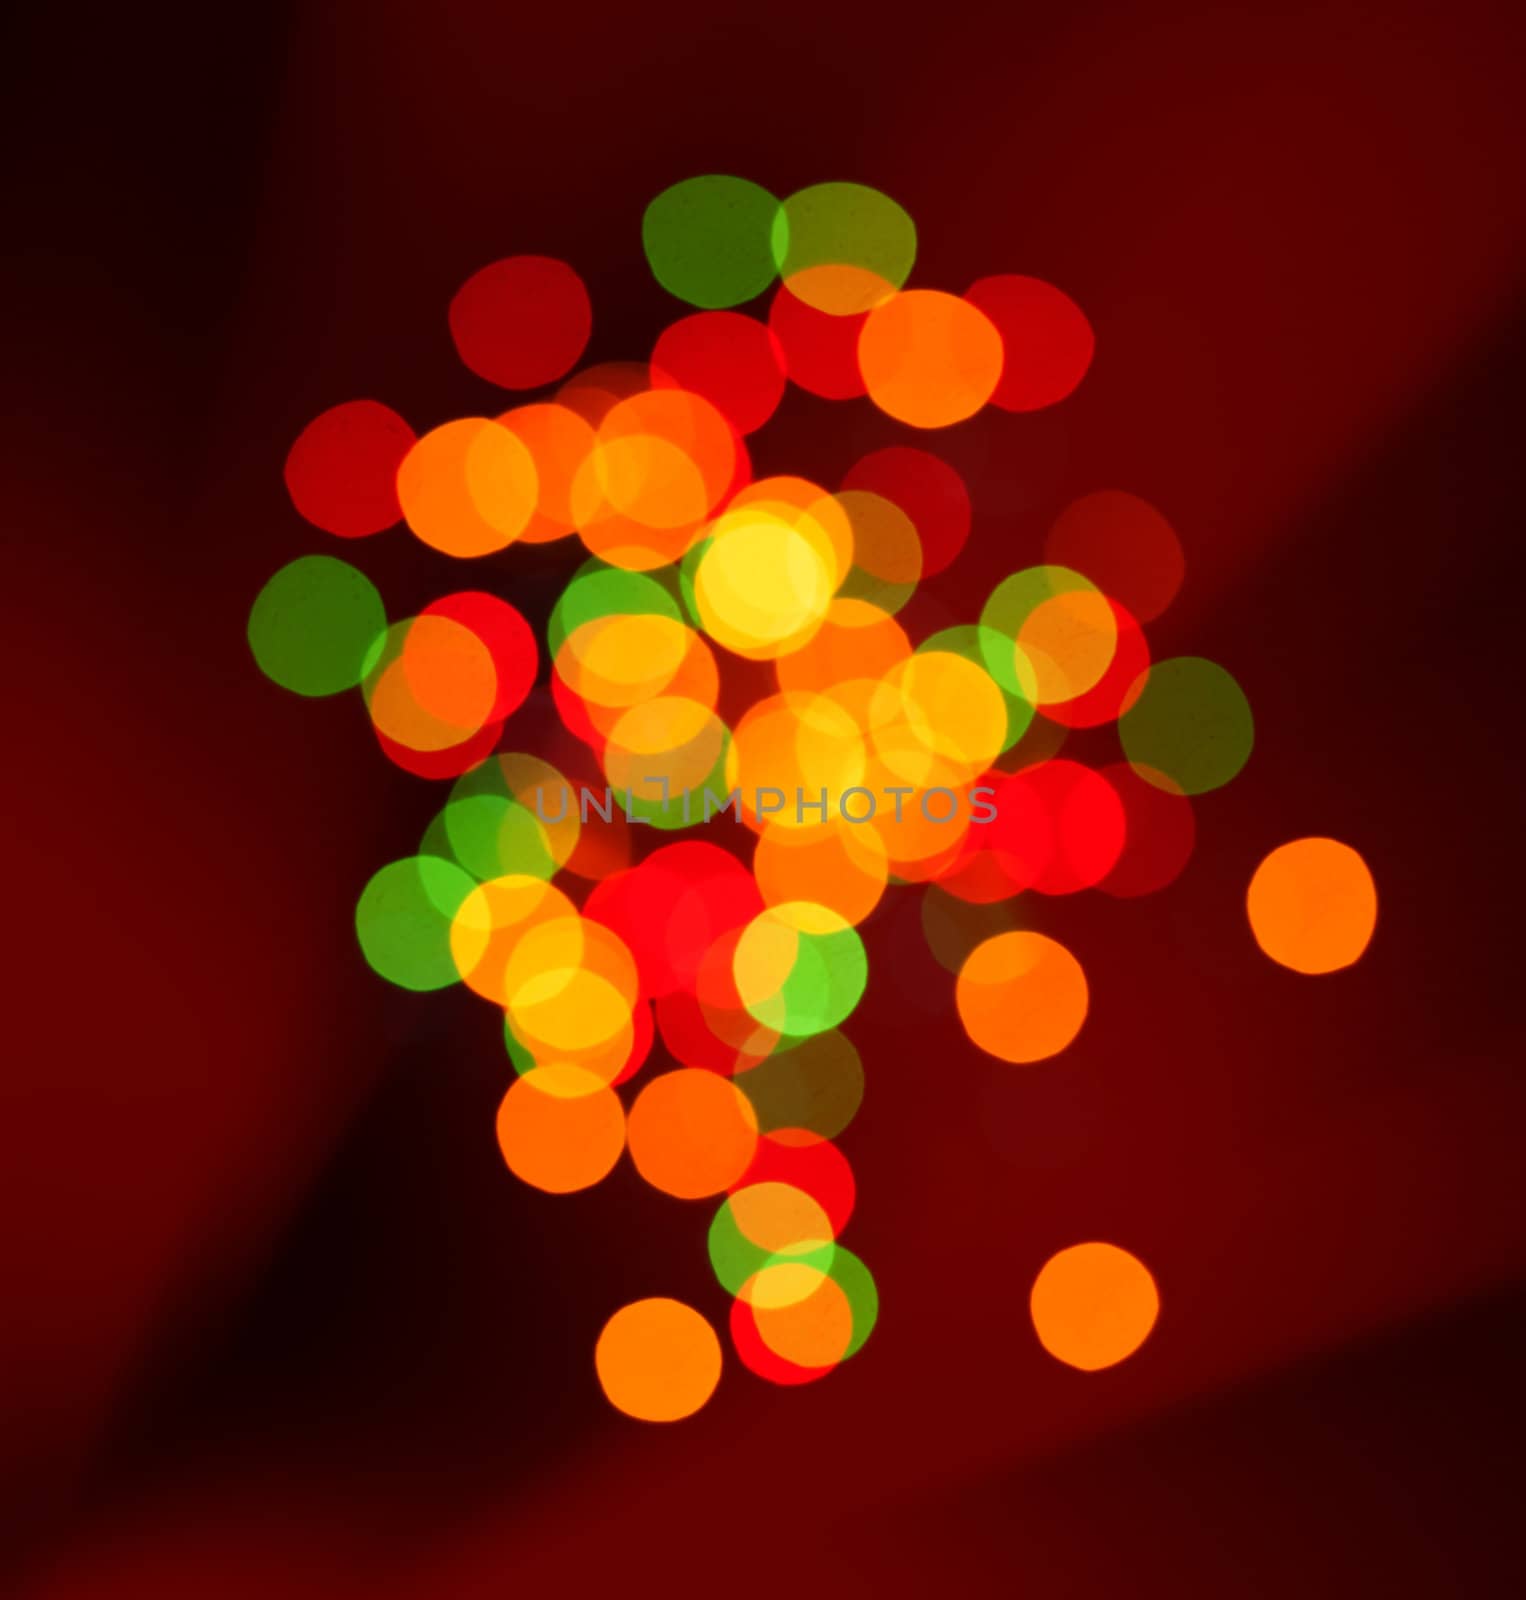 Abstract circular bokeh background of Christmas light